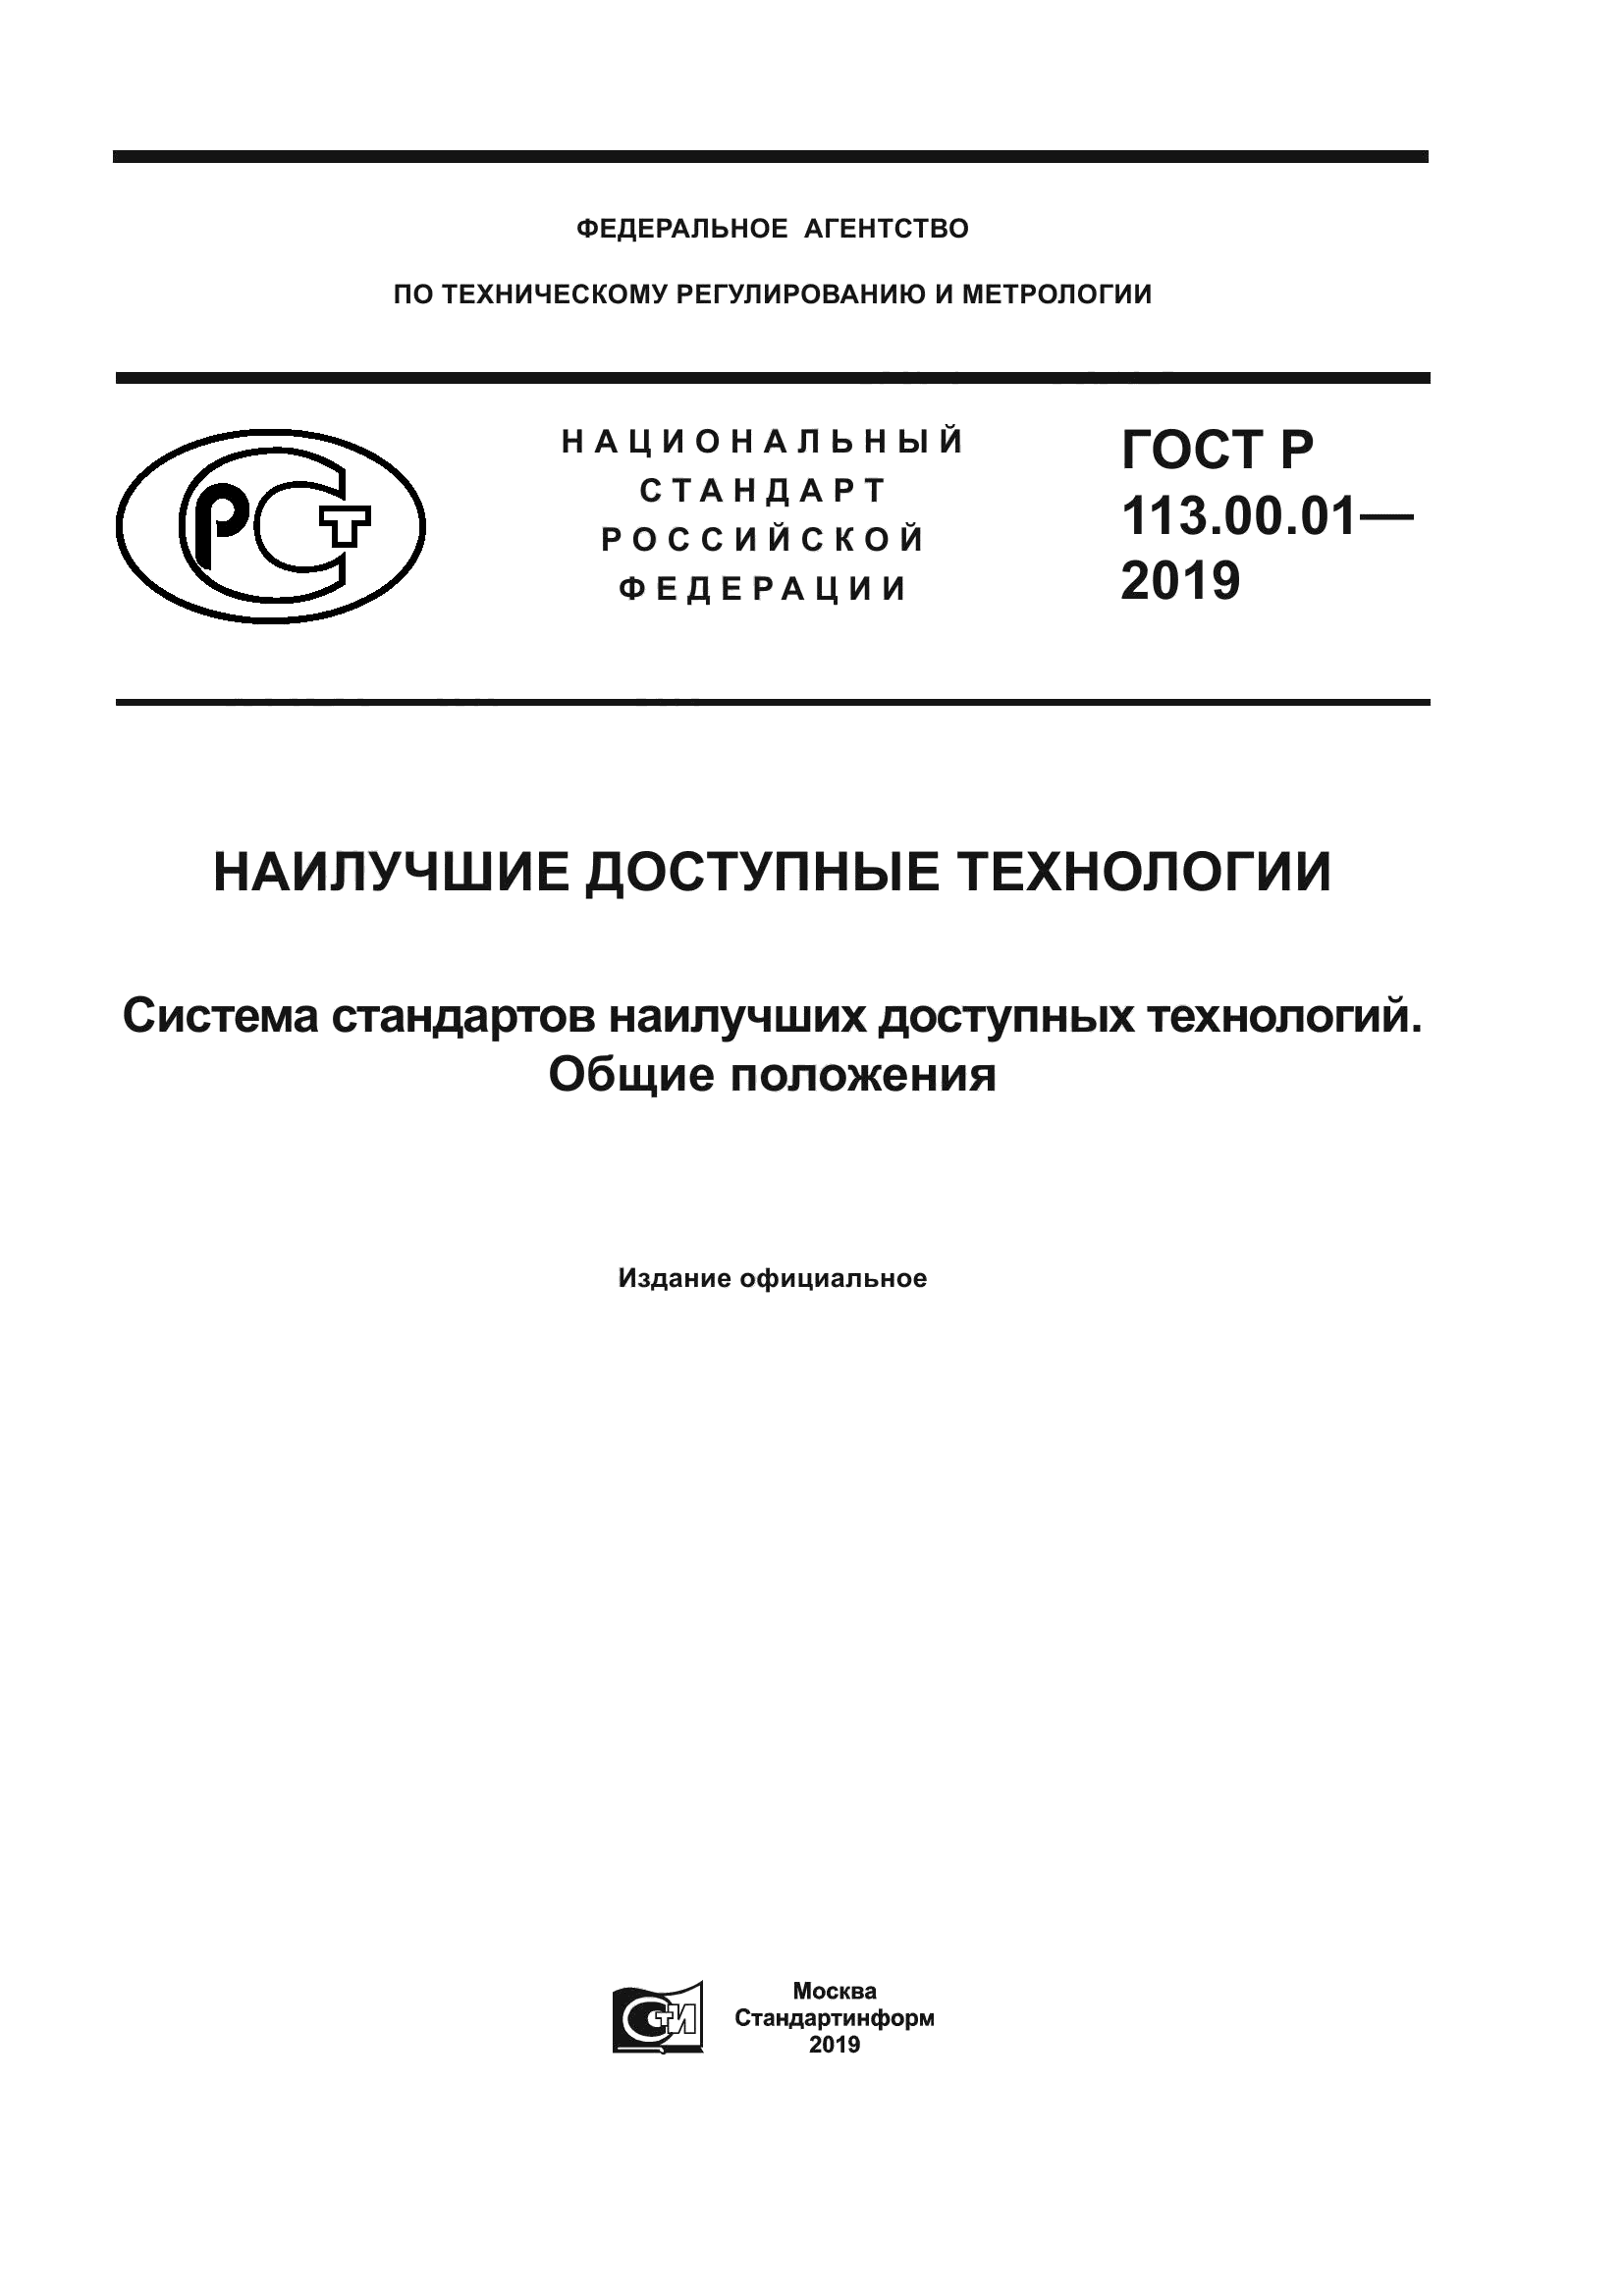 ГОСТ Р 113.00.01-2019